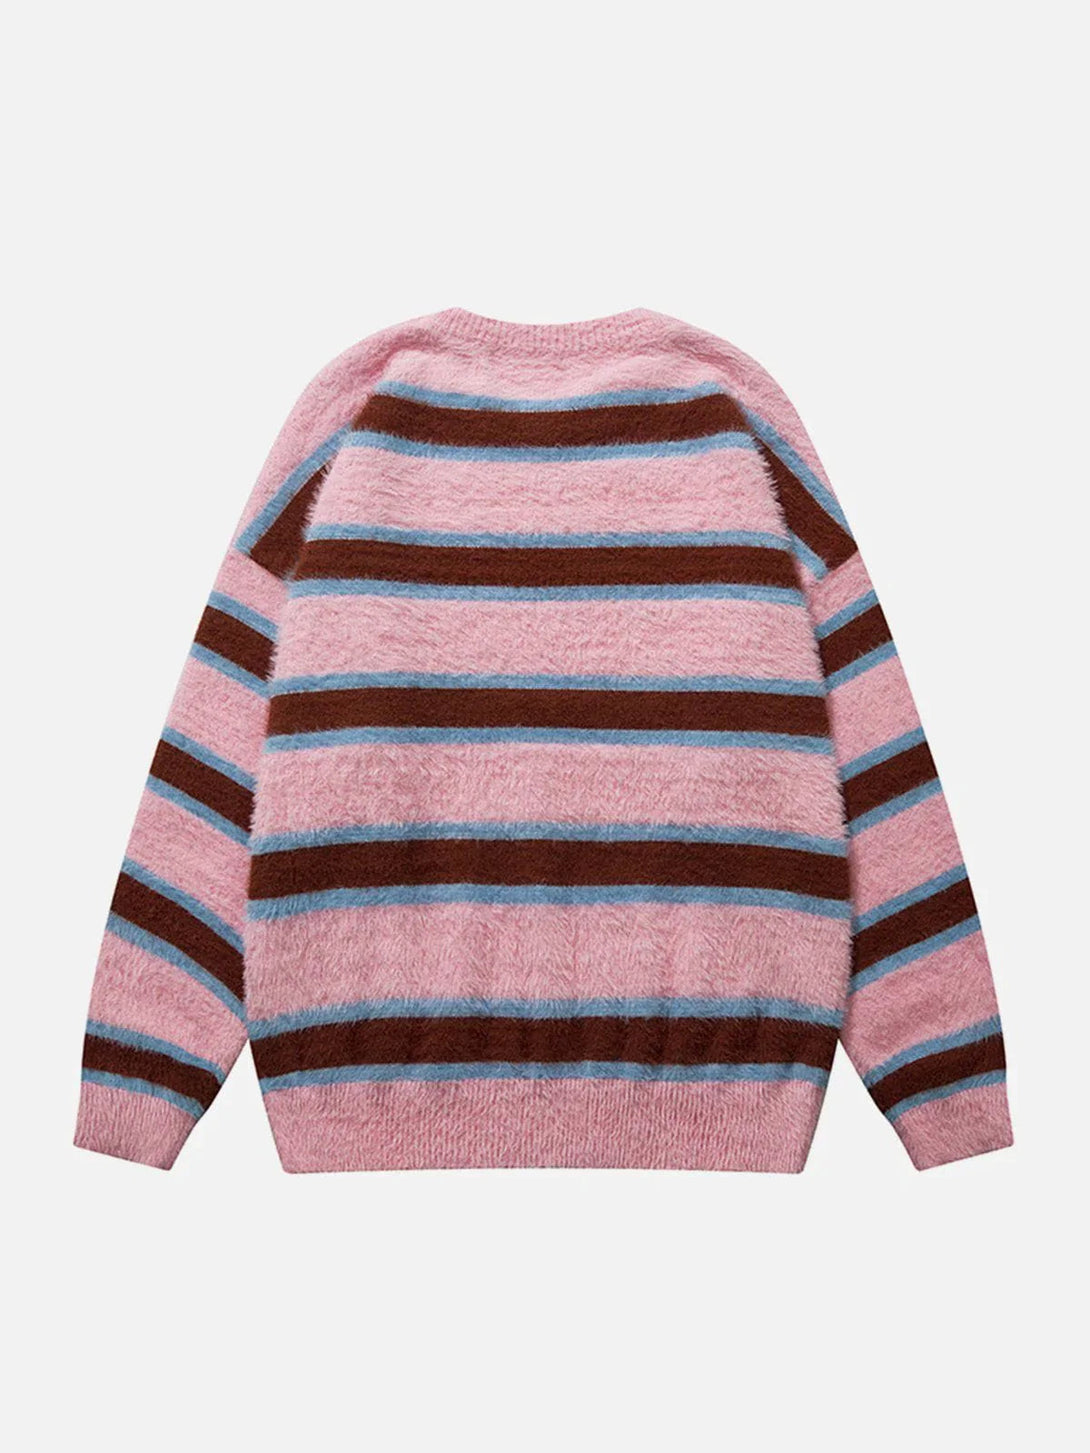 Majesda® - Striped Jacquard Sweater outfit ideas streetwear fashion